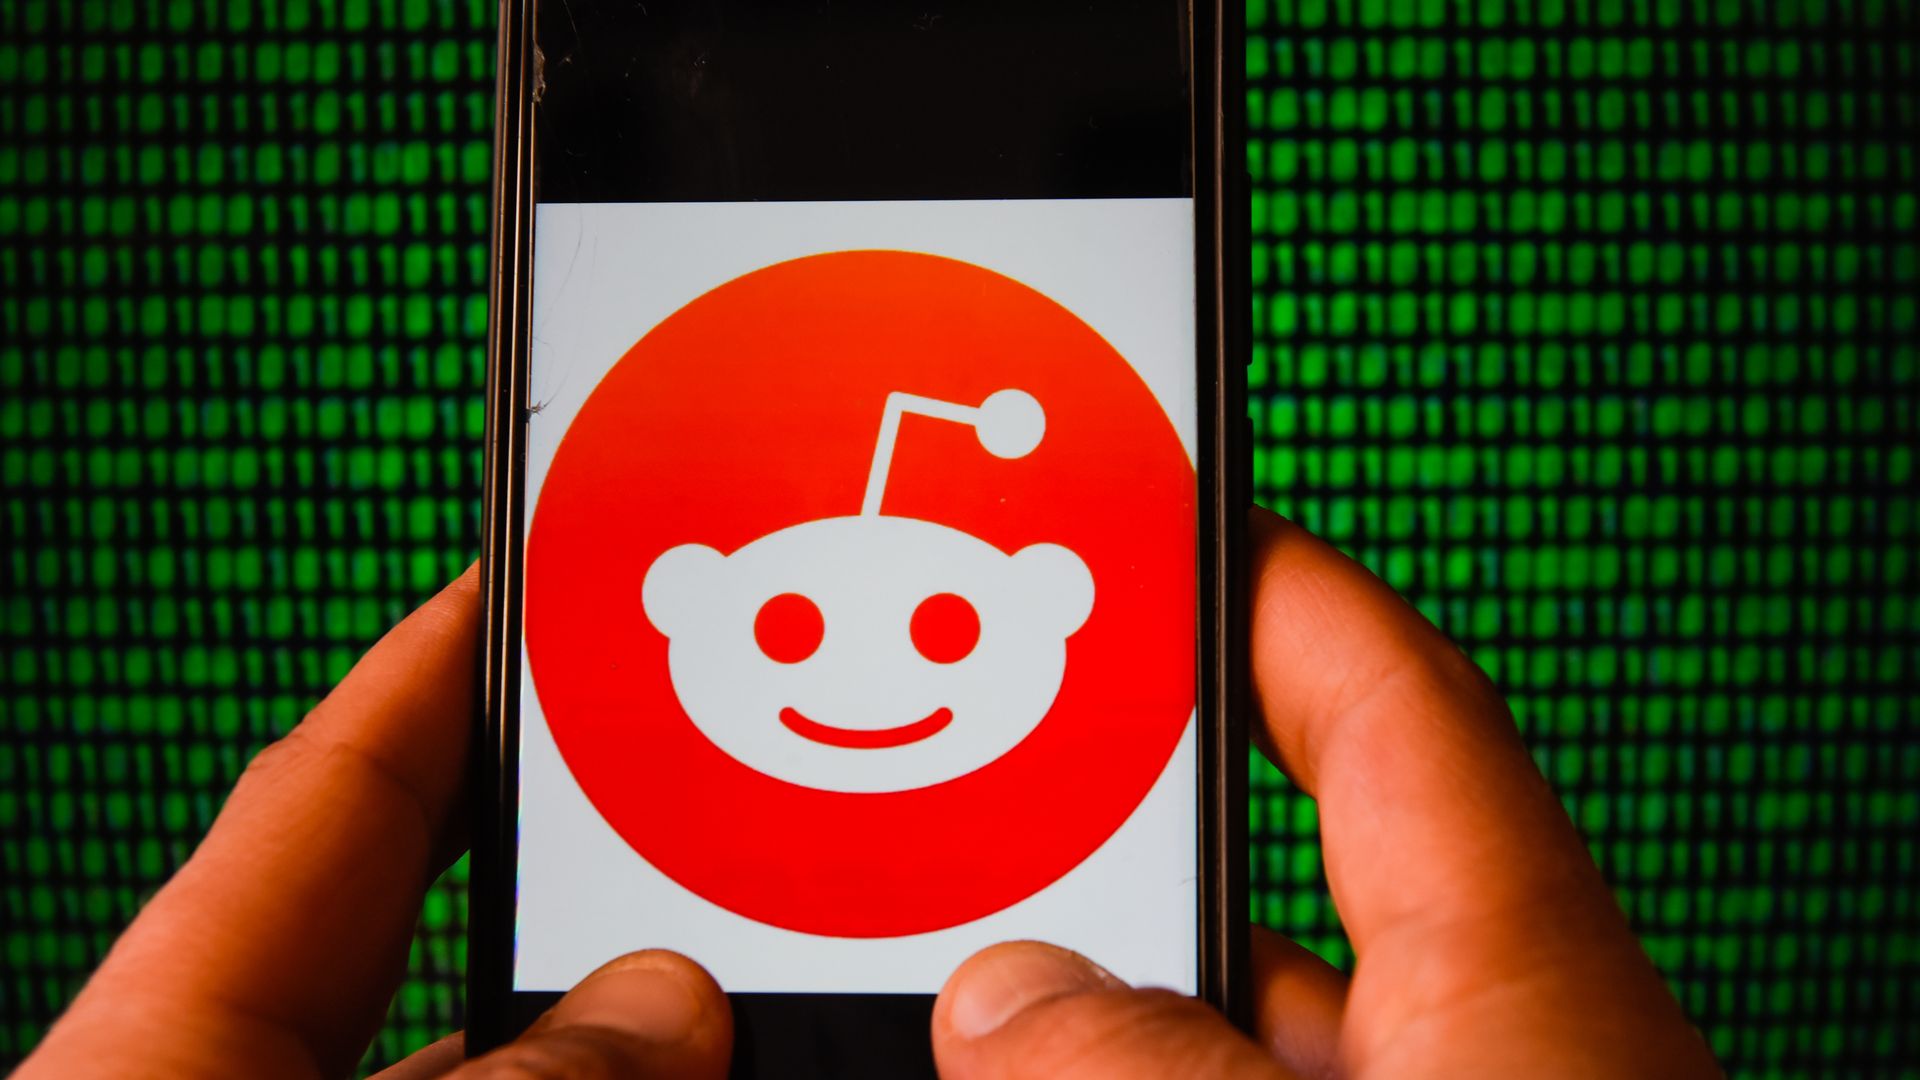 Photo of Reddit logo on a smartphone screen